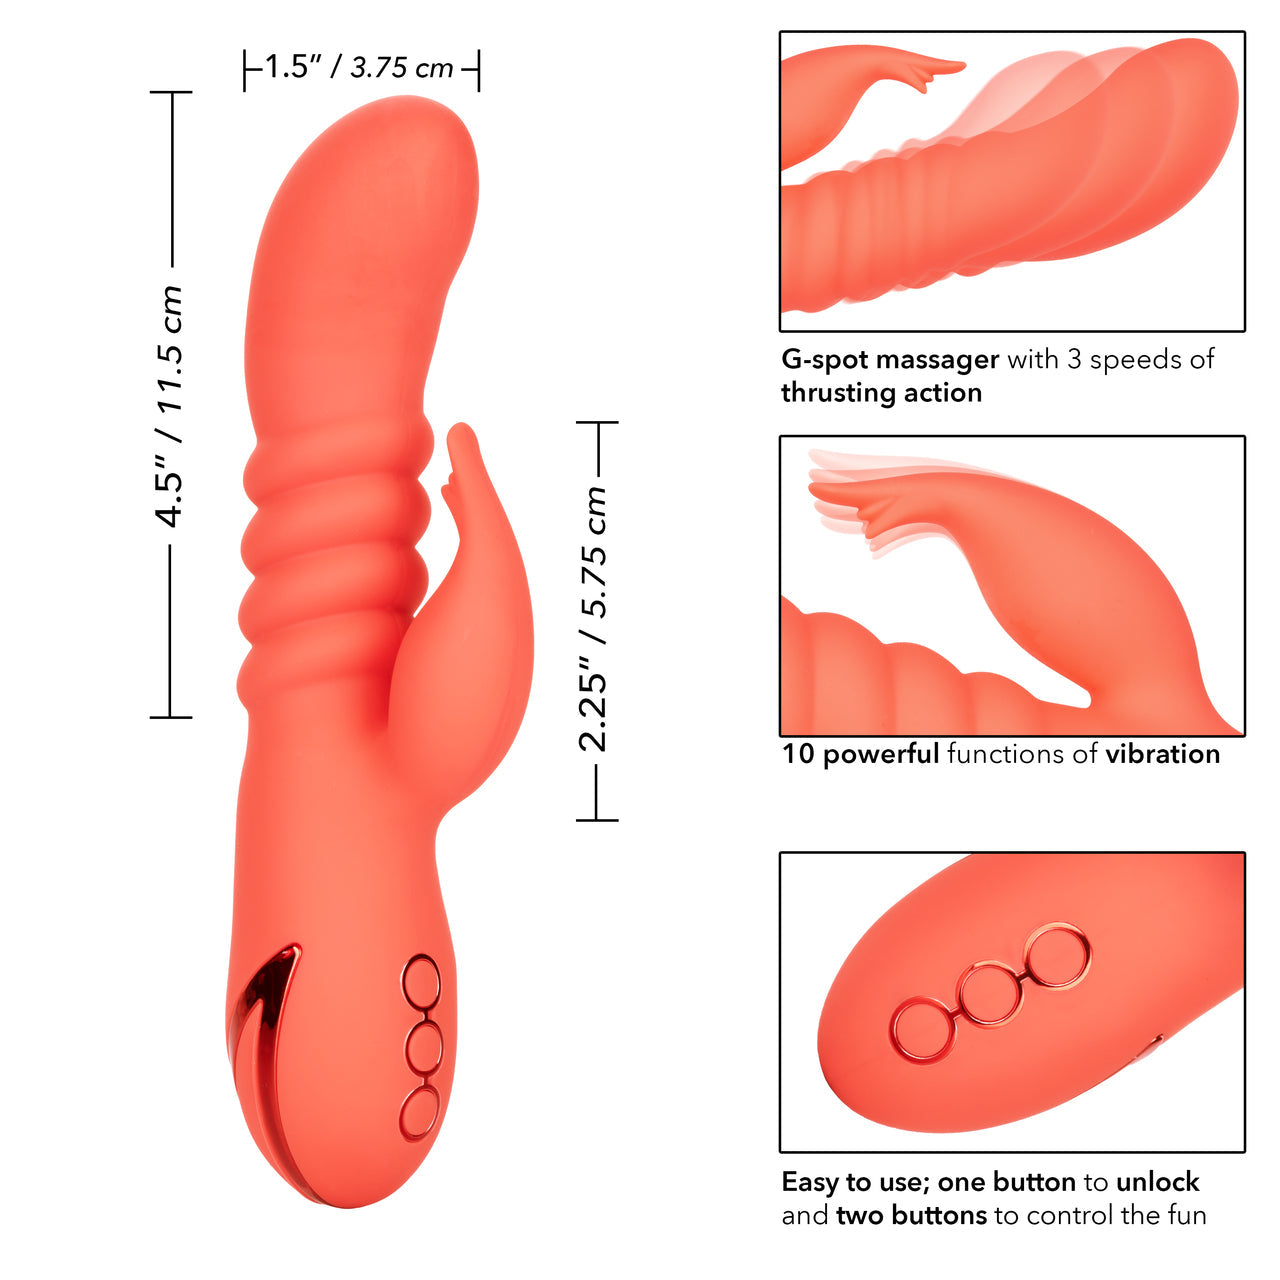 California Dreaming Orange County Cutie Rabbit Vibrator - Thorn & Feather Sex Toy Canada